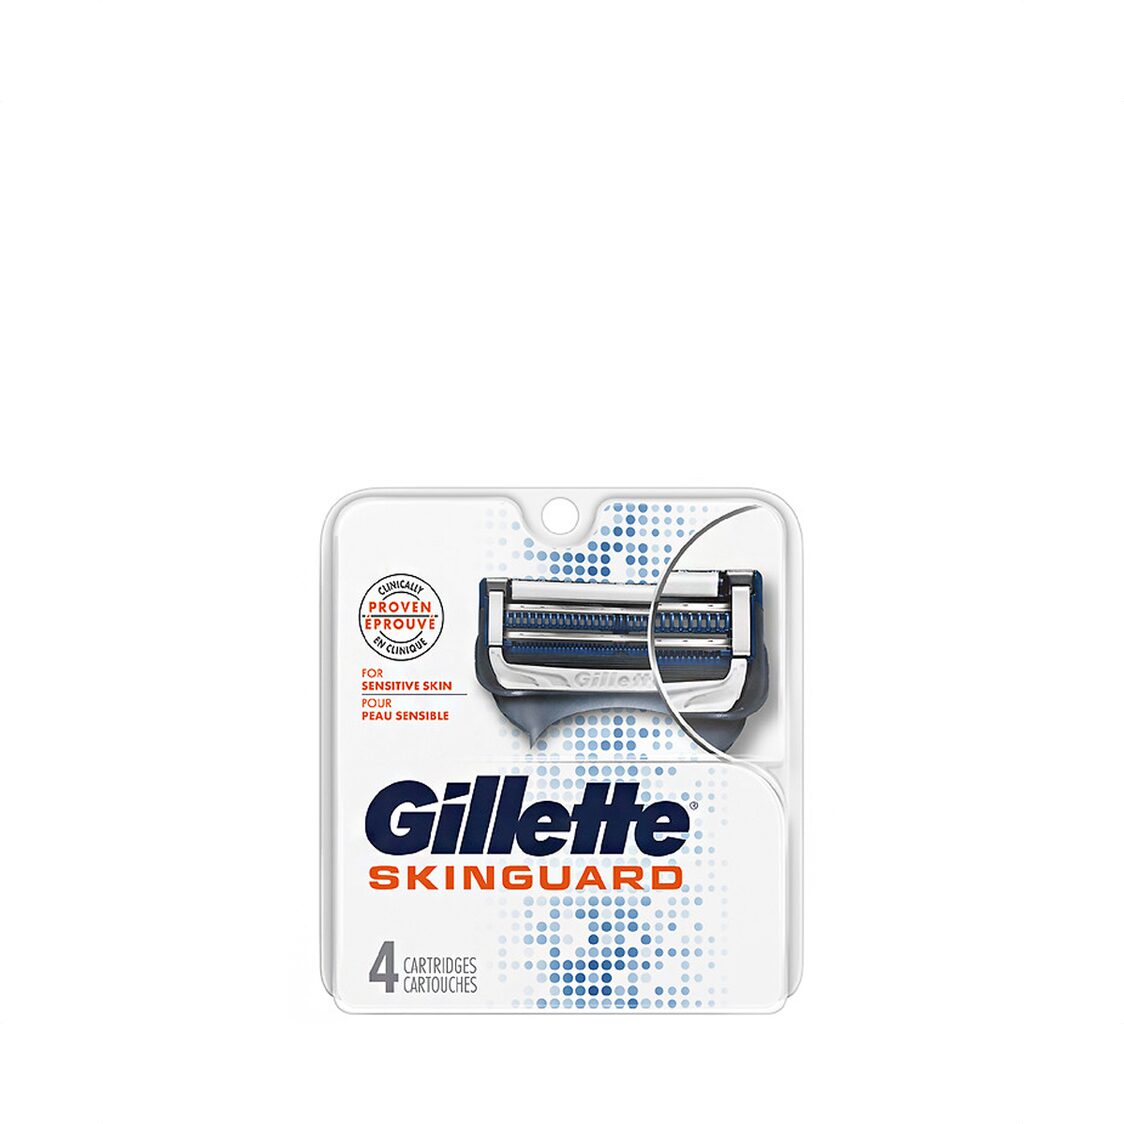 Gillette New Skinguard Cartridge 4S